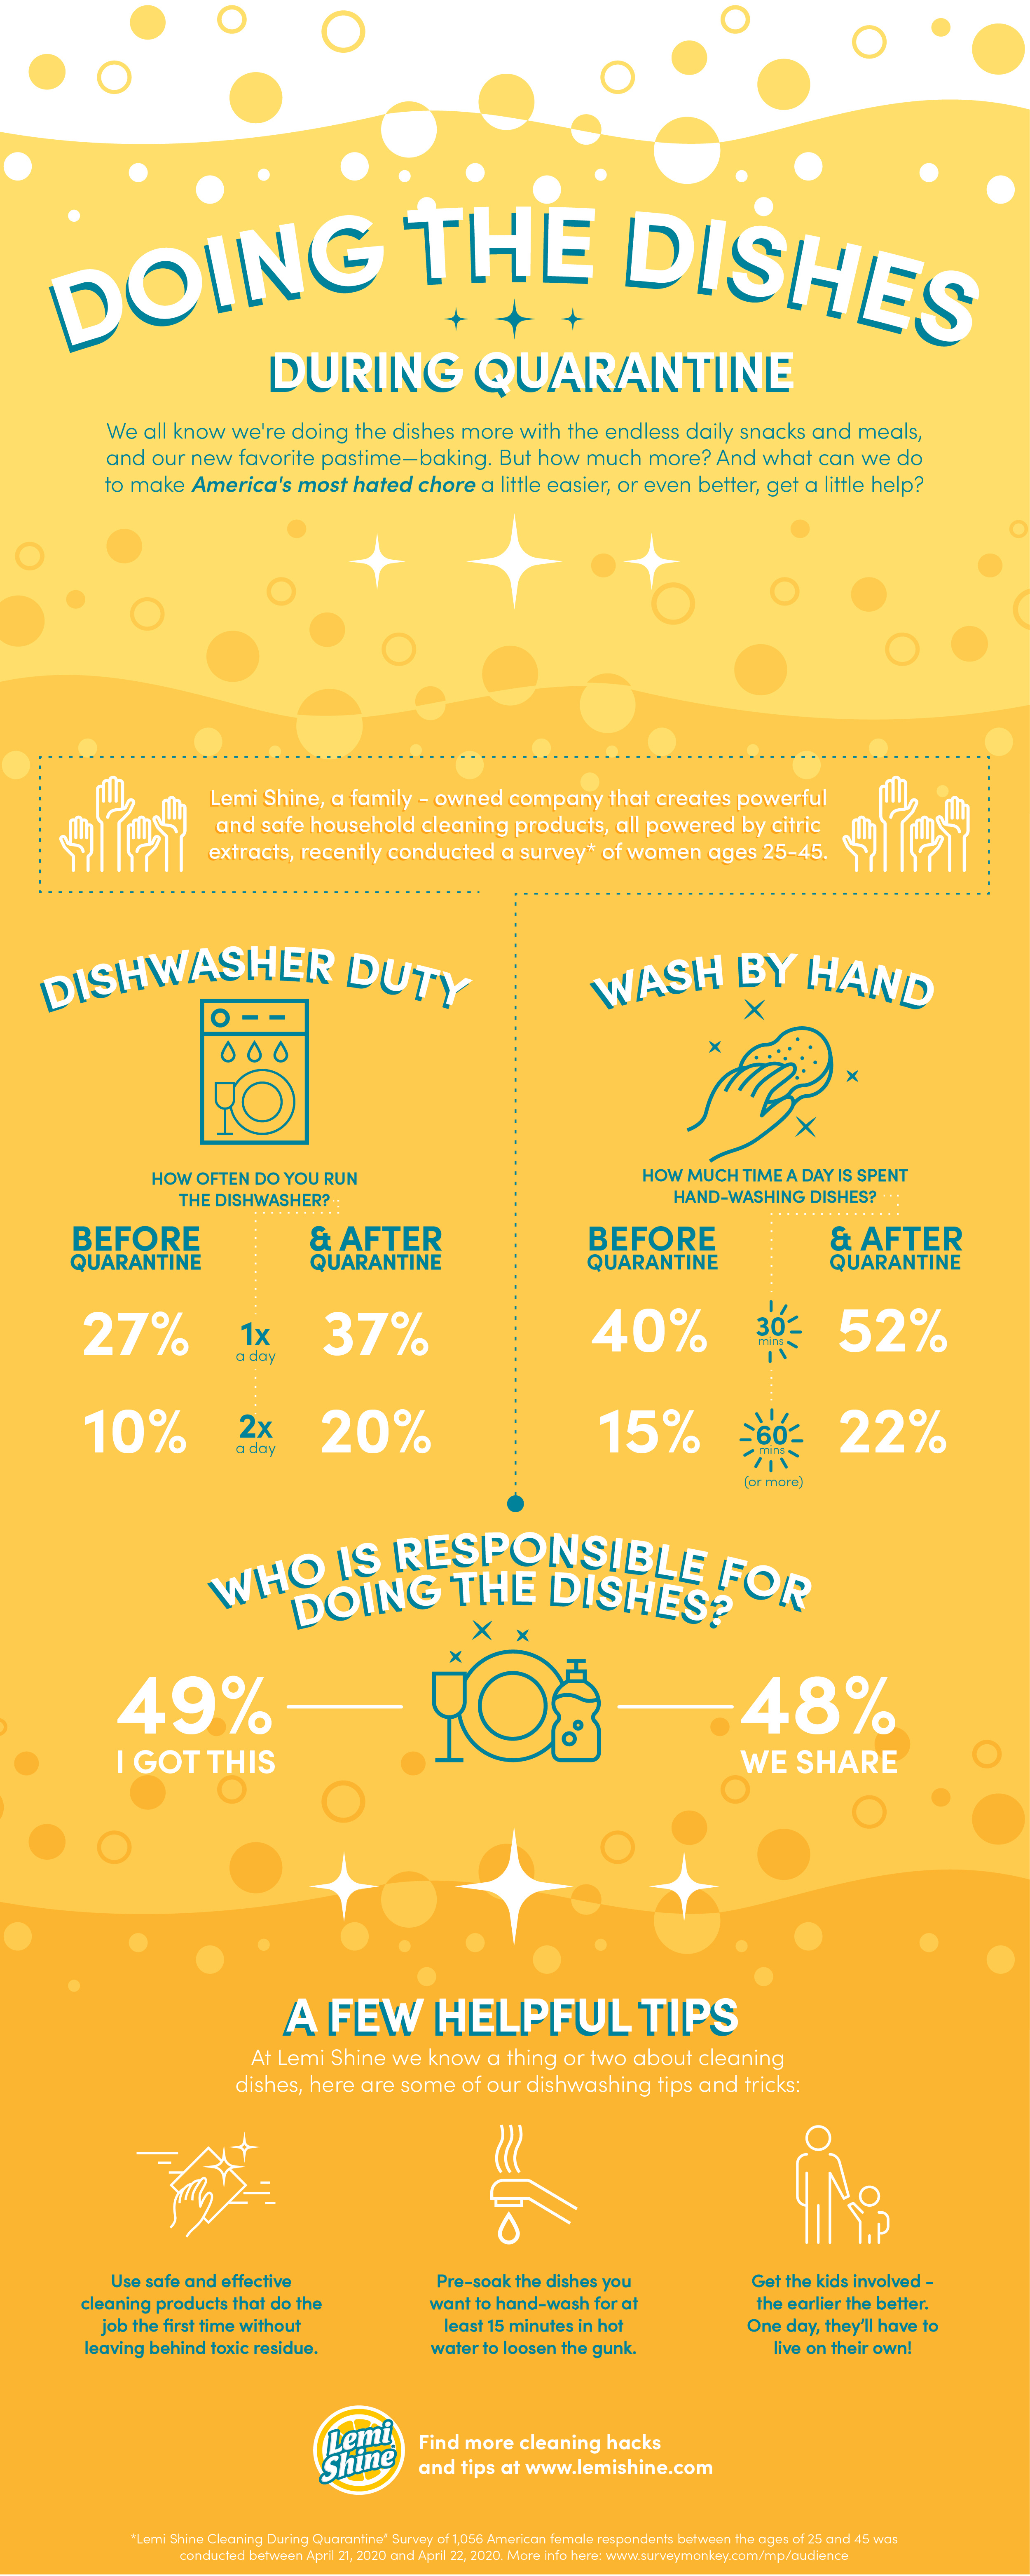 Dishes During Quarantine Survey Infographic